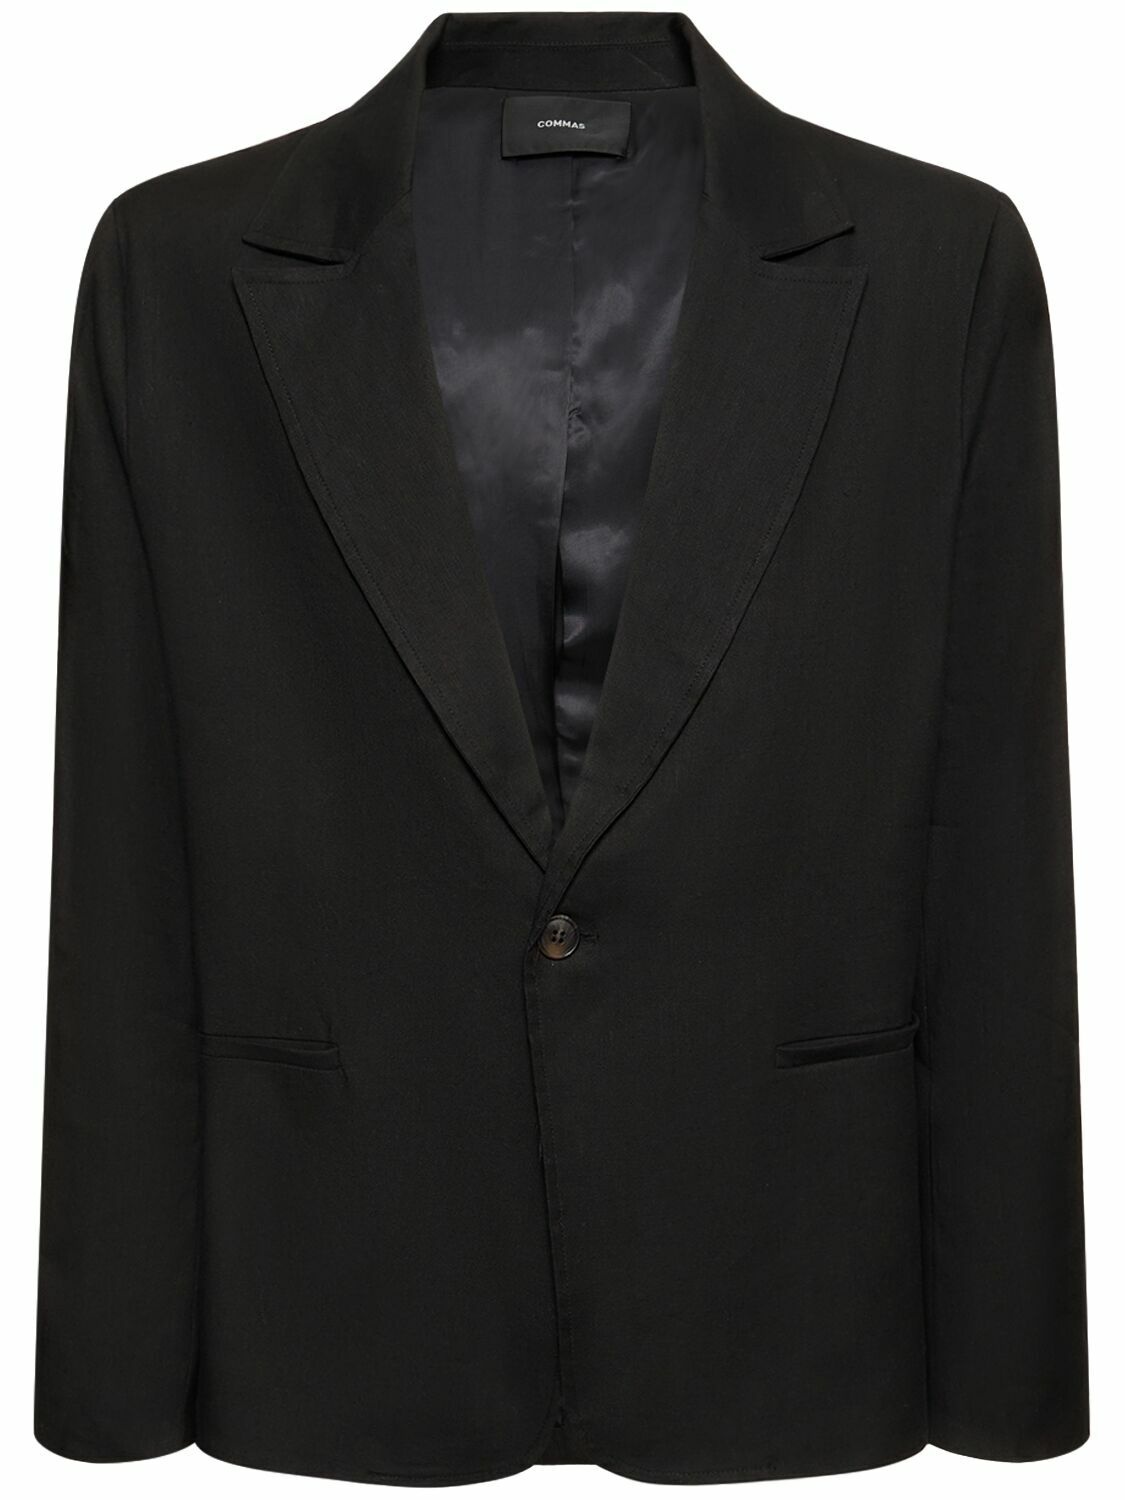 Photo: COMMAS - Linen Blend Single Breasted Jacket